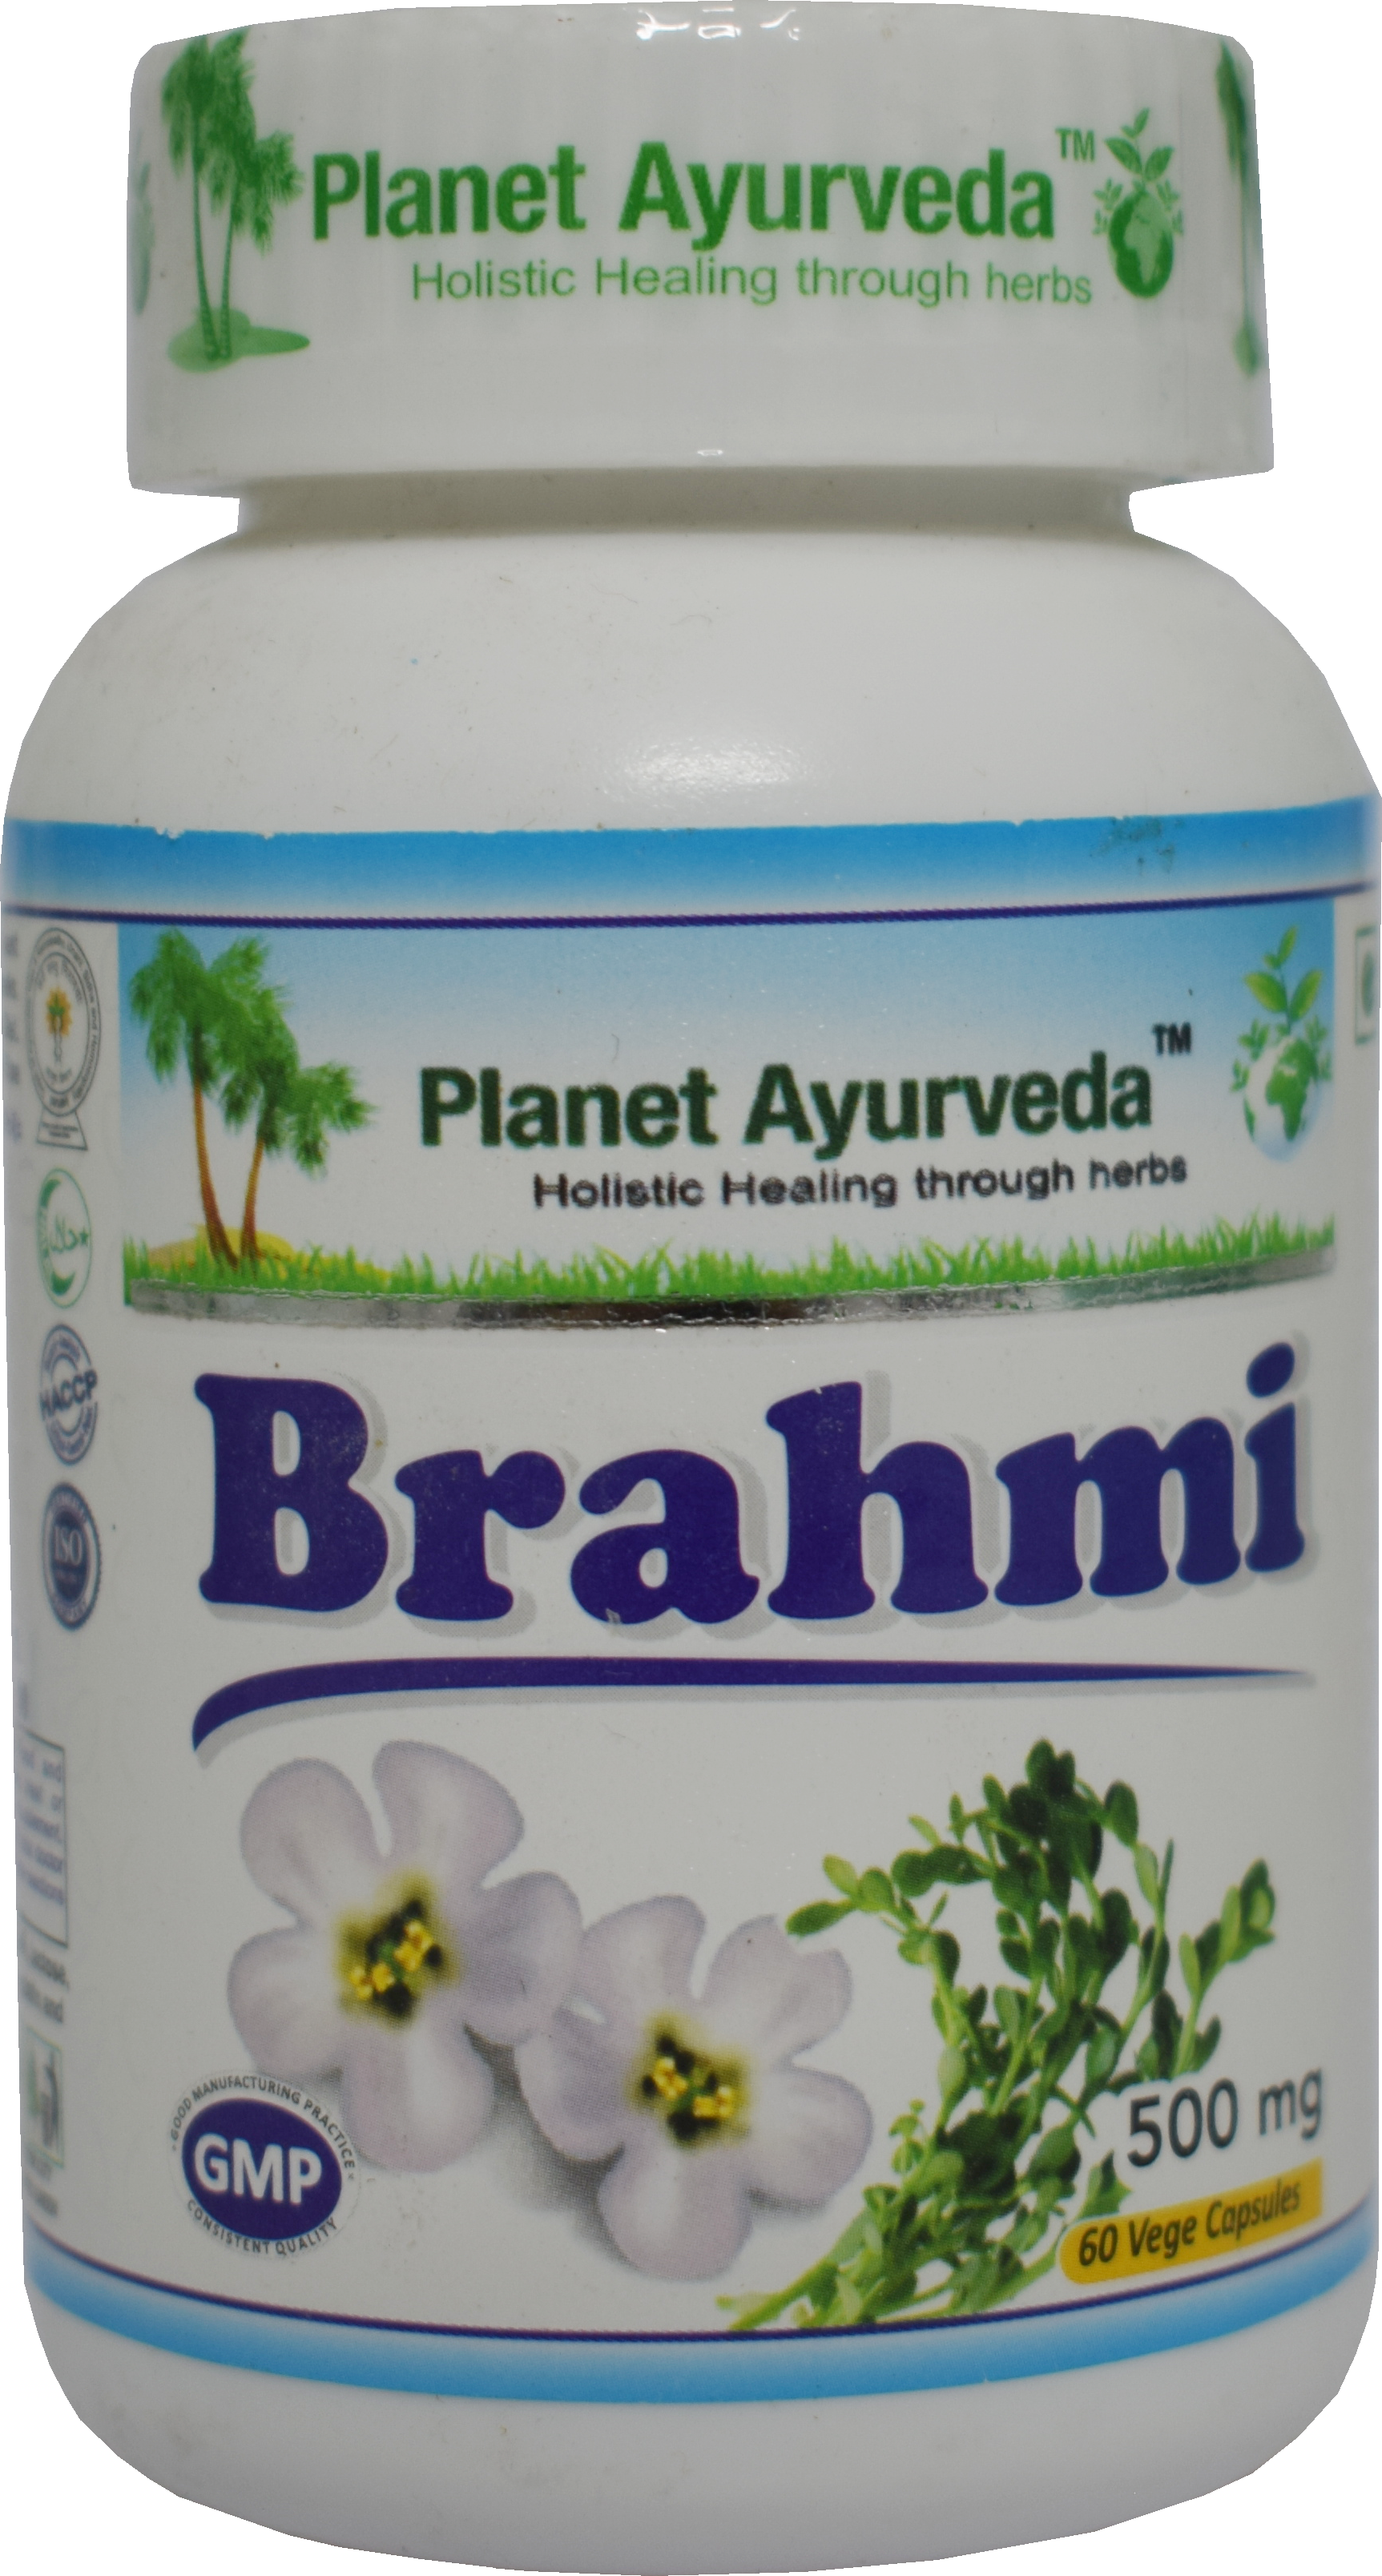 Buy Planet Ayurveda Brahmi Capsules at Best Price Online